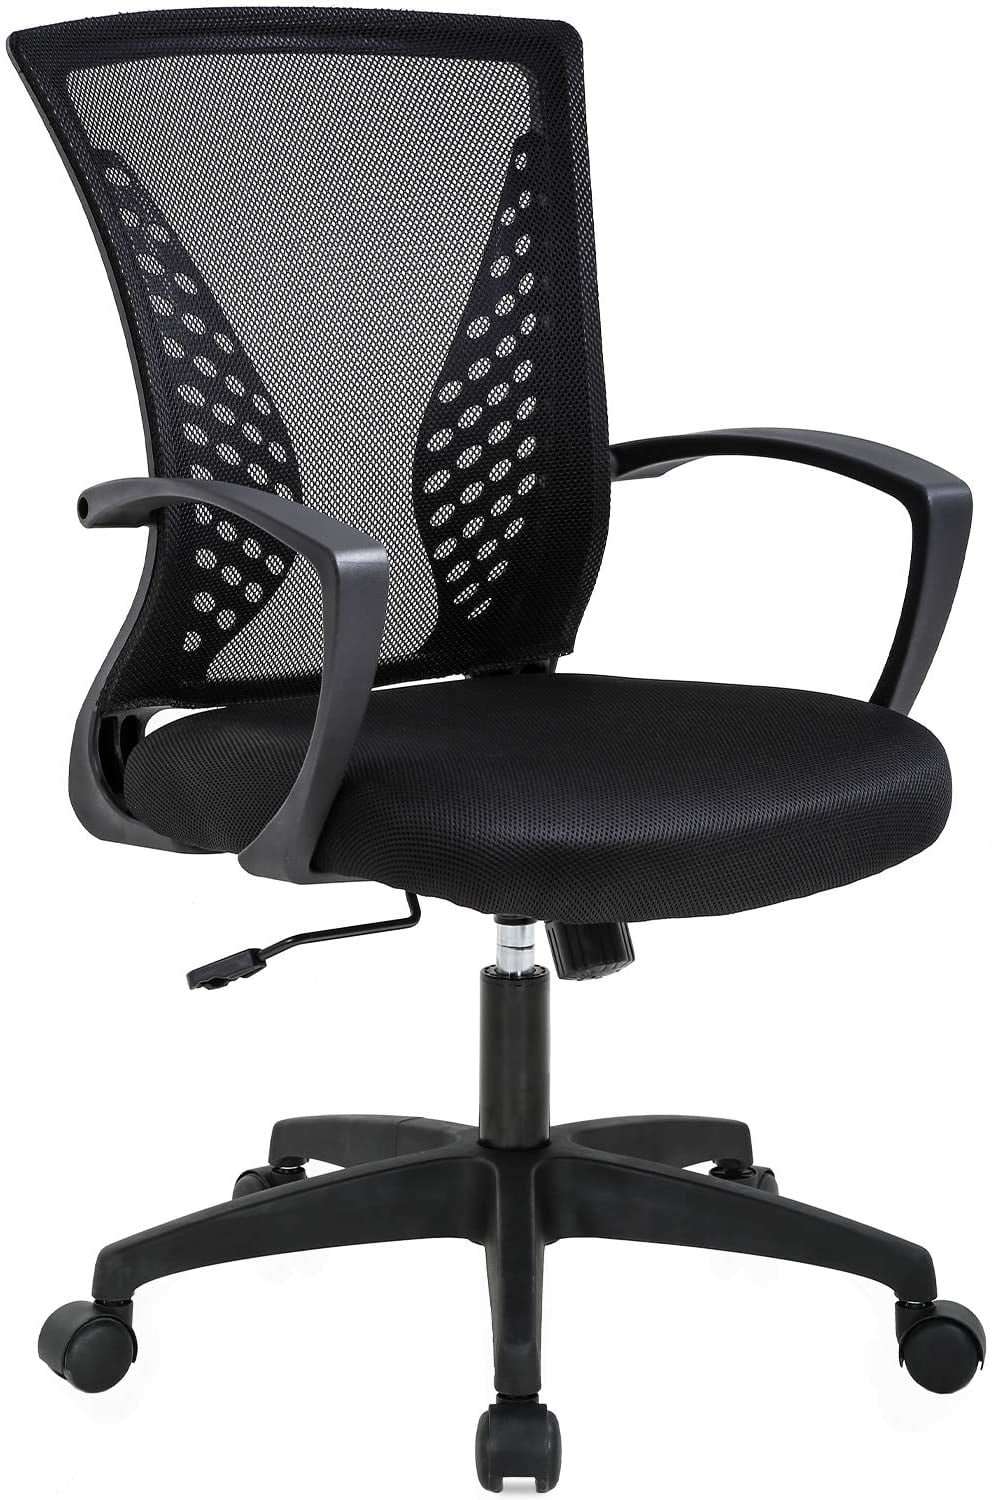 Home Office Chair Ergonomic Desk Chair Mesh Computer Chair with Lumbar Black 